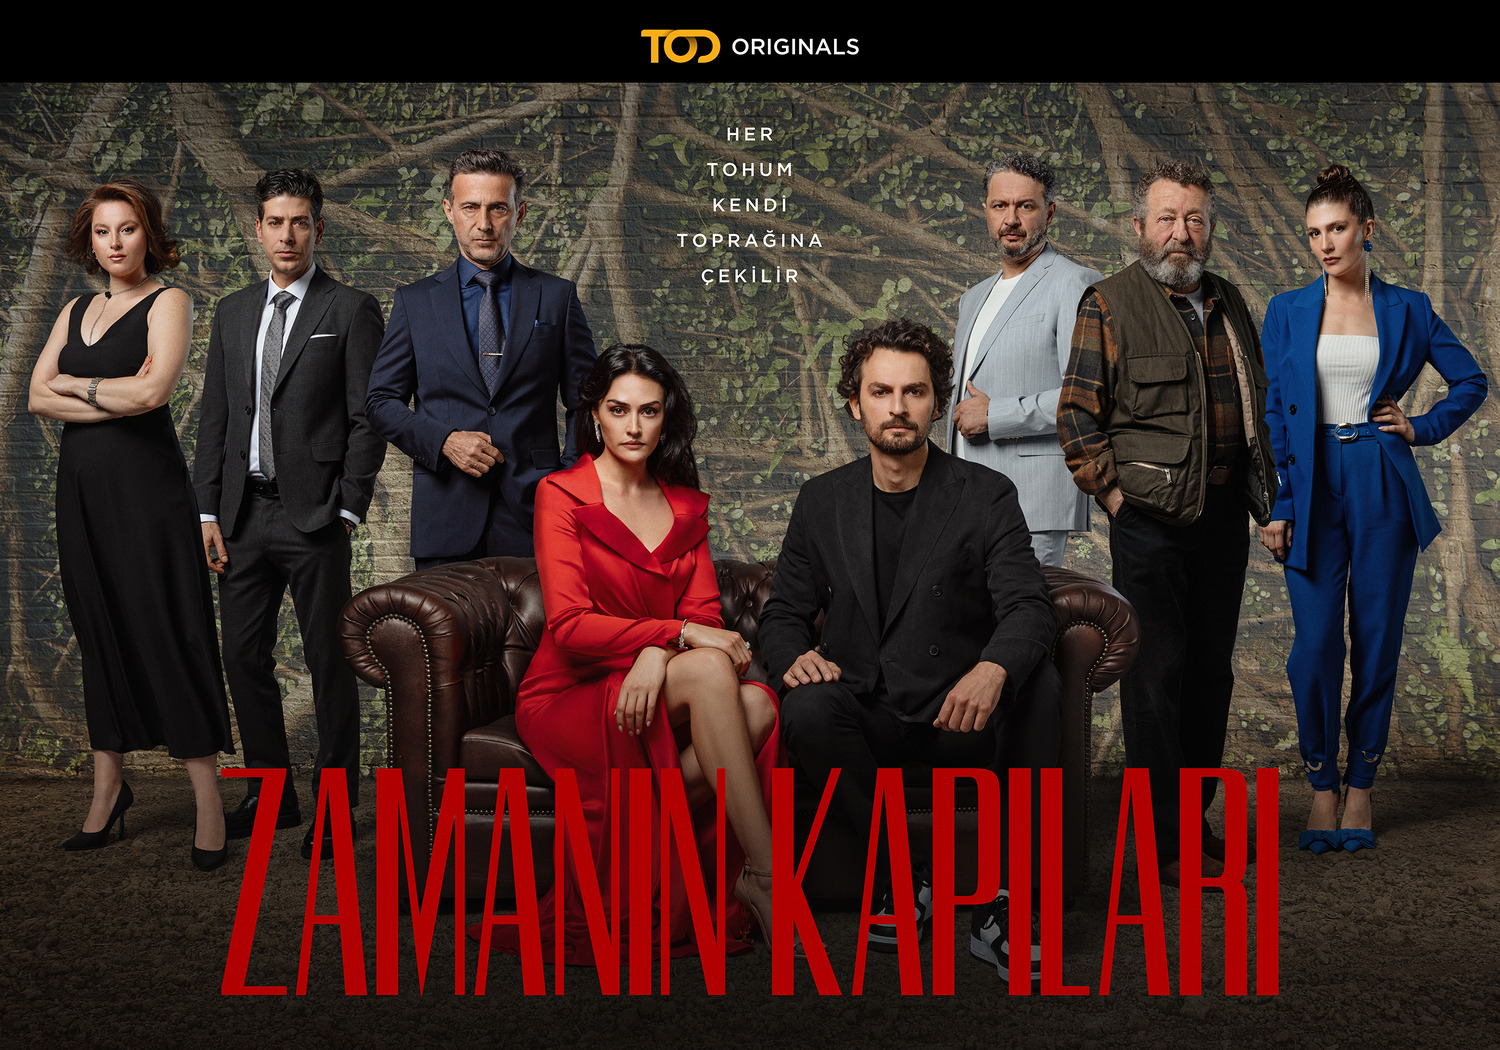 Extra Large TV Poster Image for Zamanin Kapilari (#4 of 4)